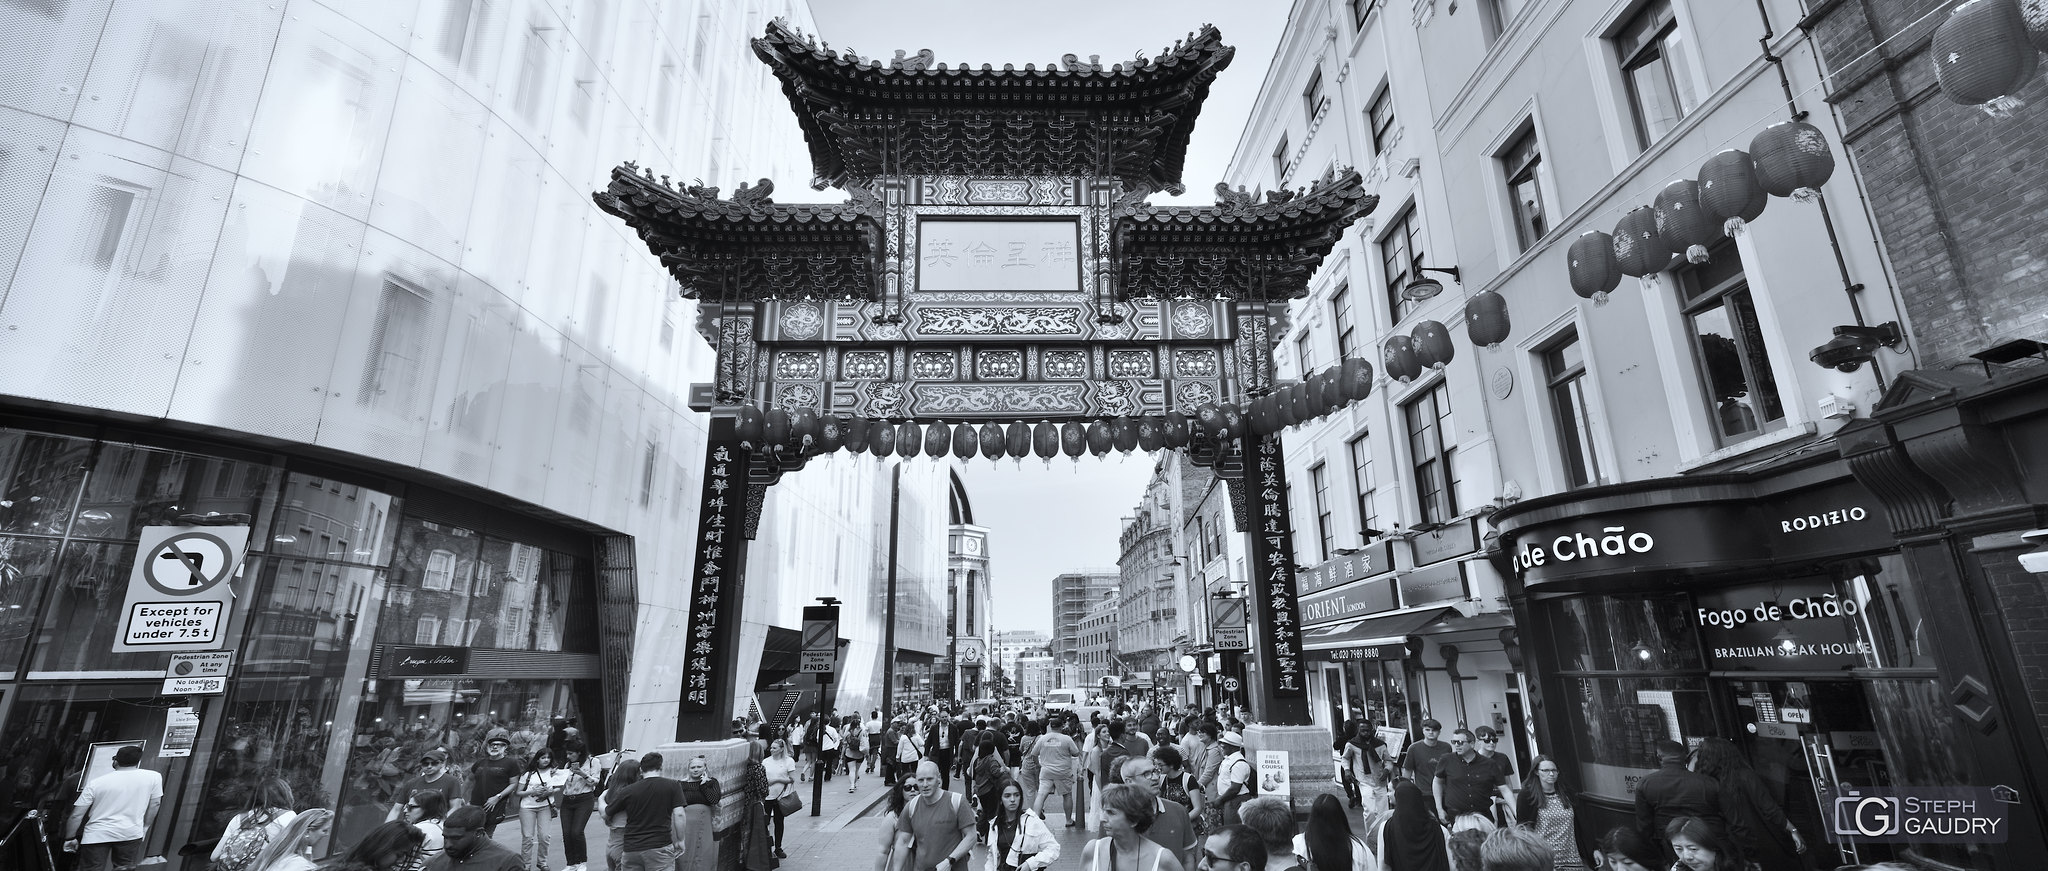 Chinatown Gate (BW) [Klik om de diavoorstelling te starten]